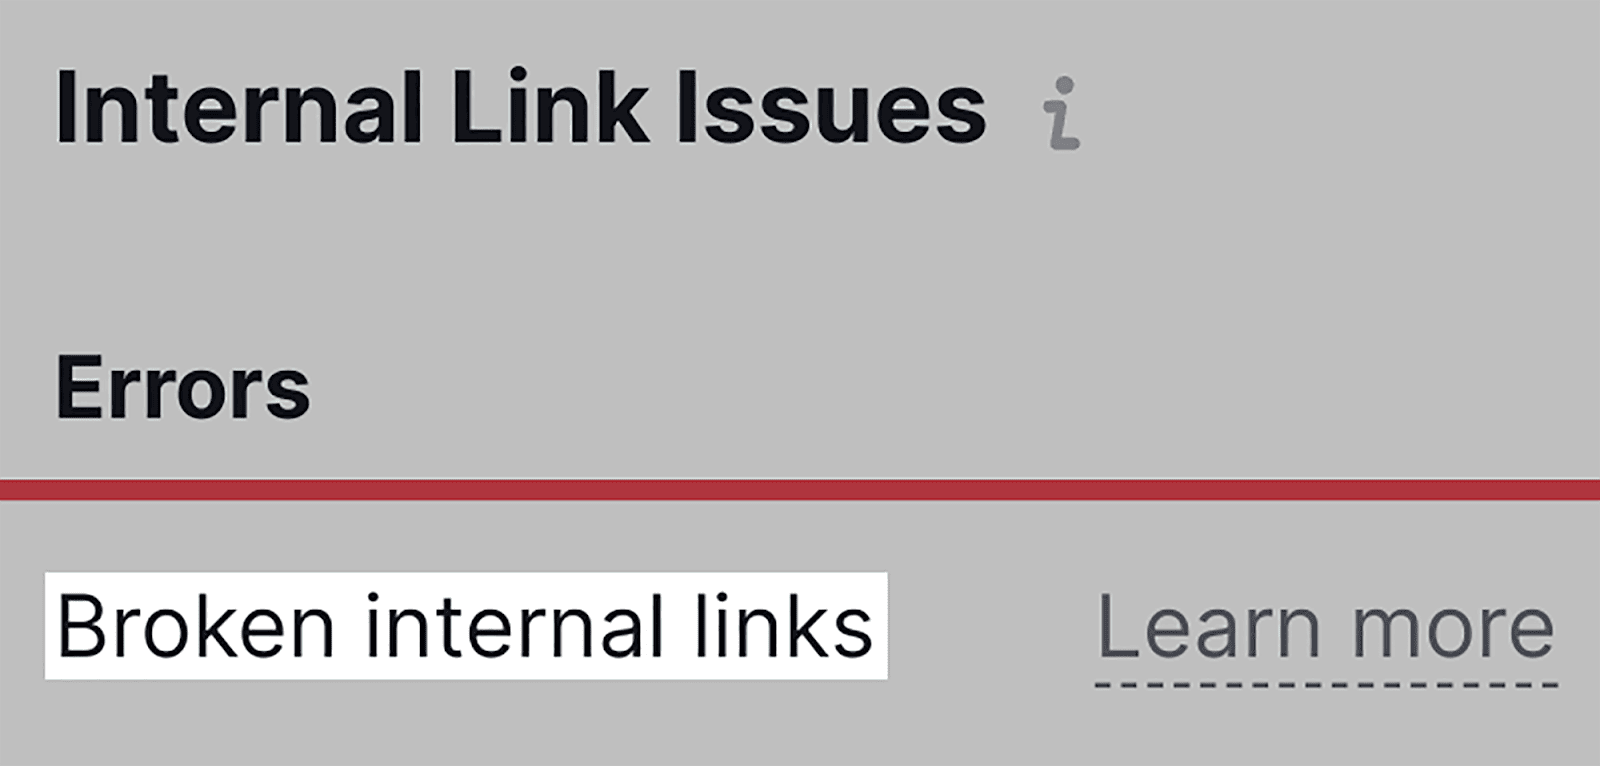 Internal Links 'Errors' indicate broken links